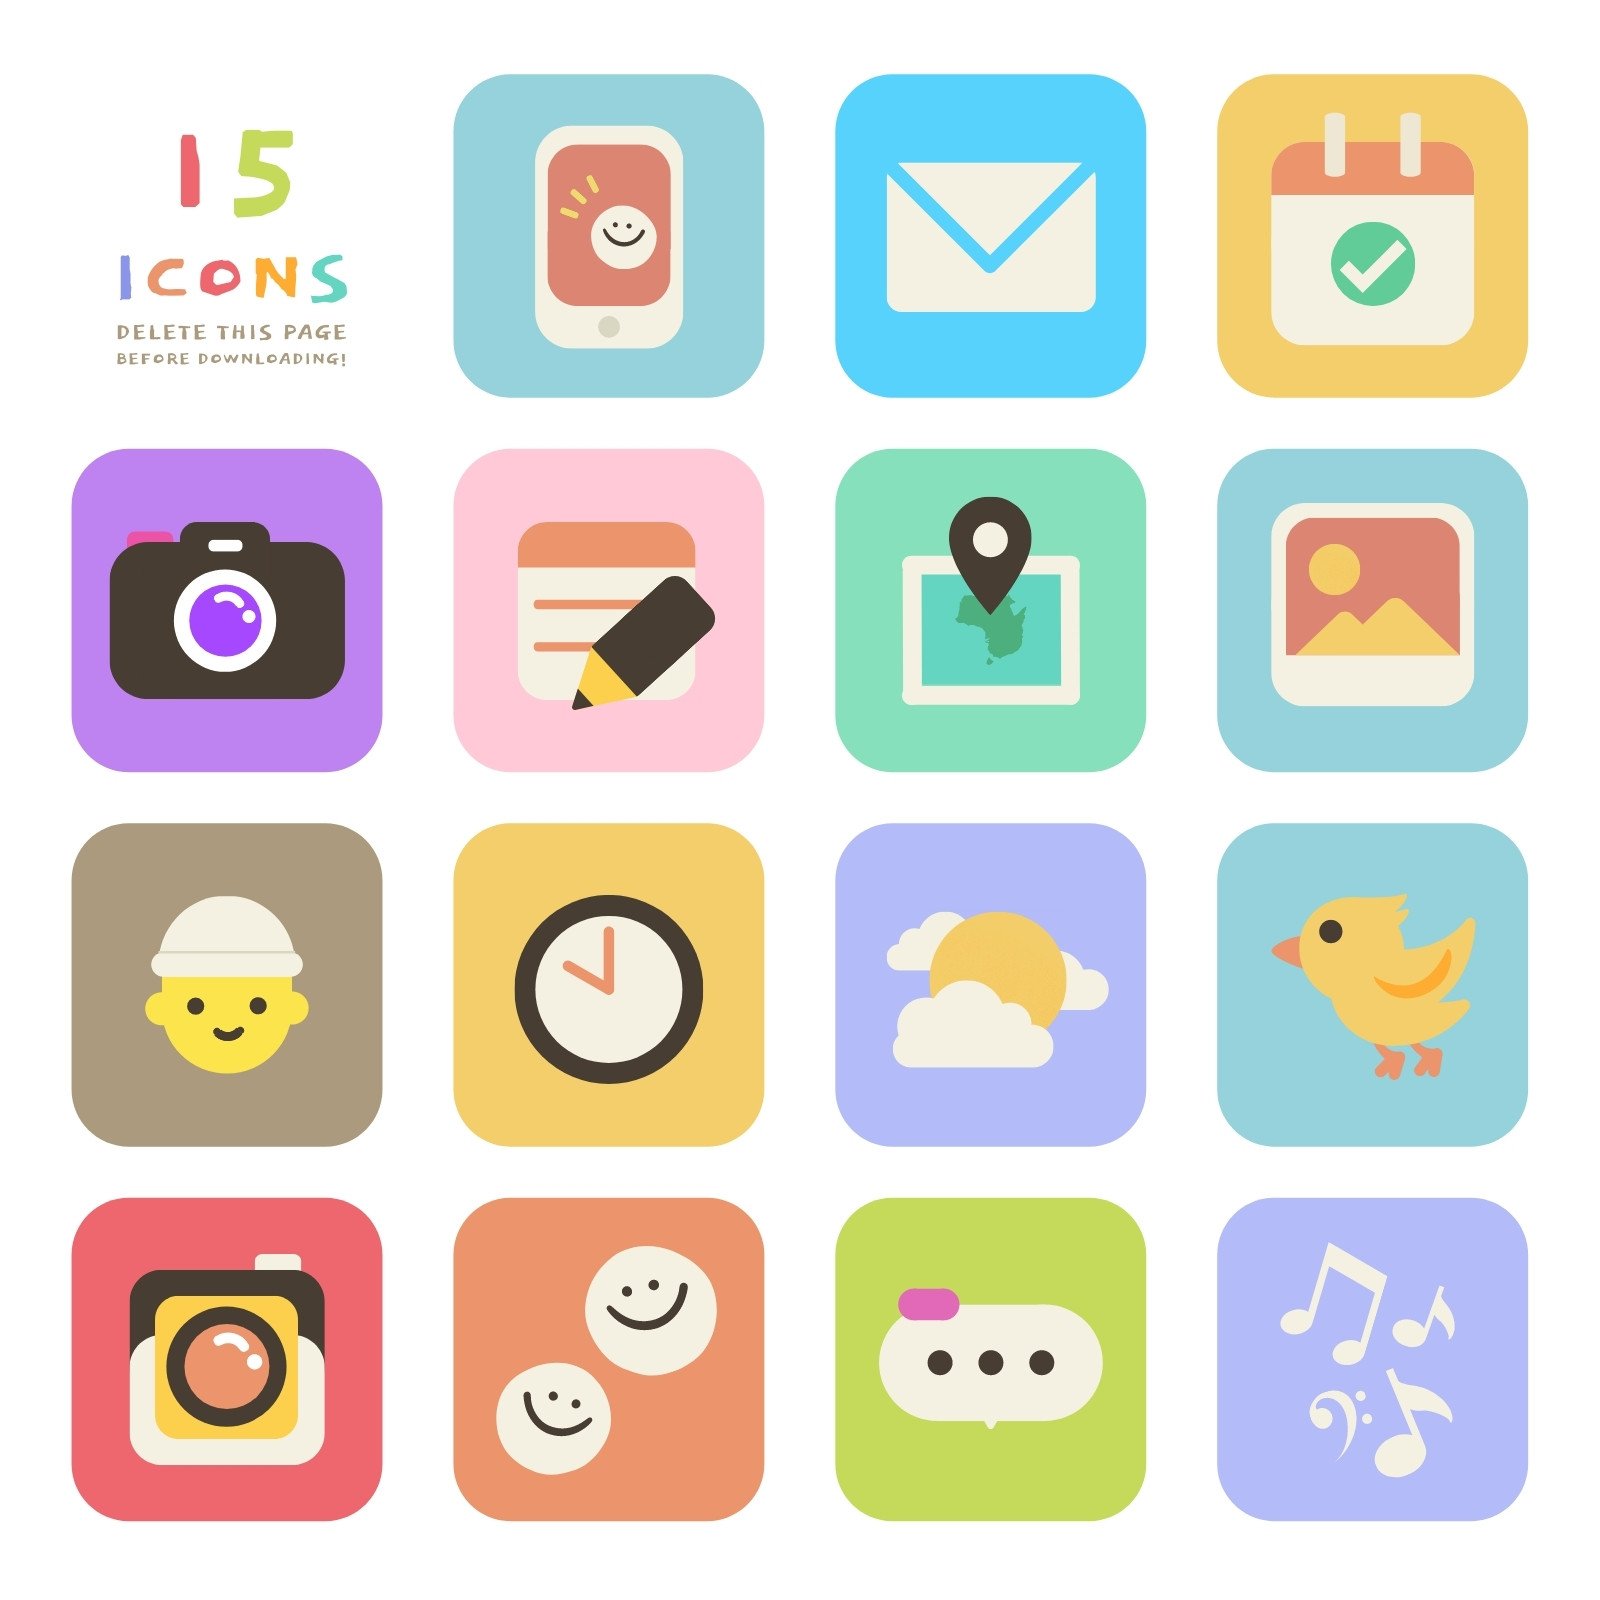 Free and customizable iOS icon templates | Canva